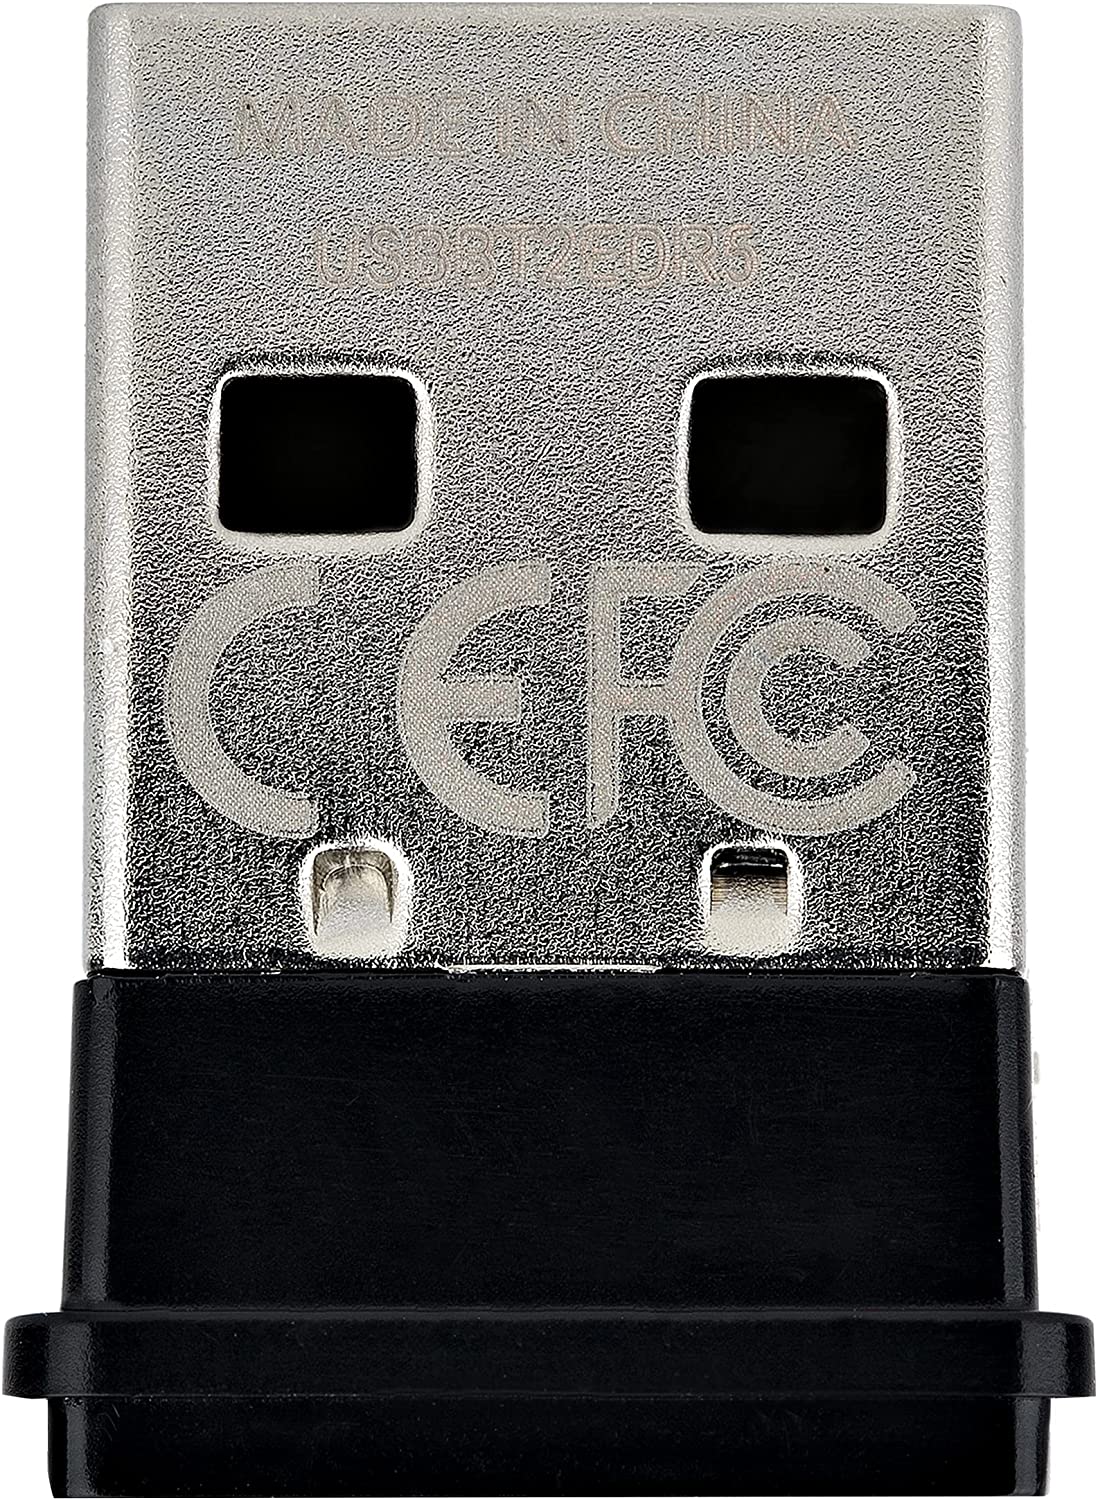 StarTech.com USB Bluetooth 5.0 Adapter, USB Bluetooth Dongle for PC/Computer, BT 5.0 Adapter for Headsets, Mini USB Bluetooth Receiver, Windows/Linux (USBA-BLUETOOTH-V5-C2), Black